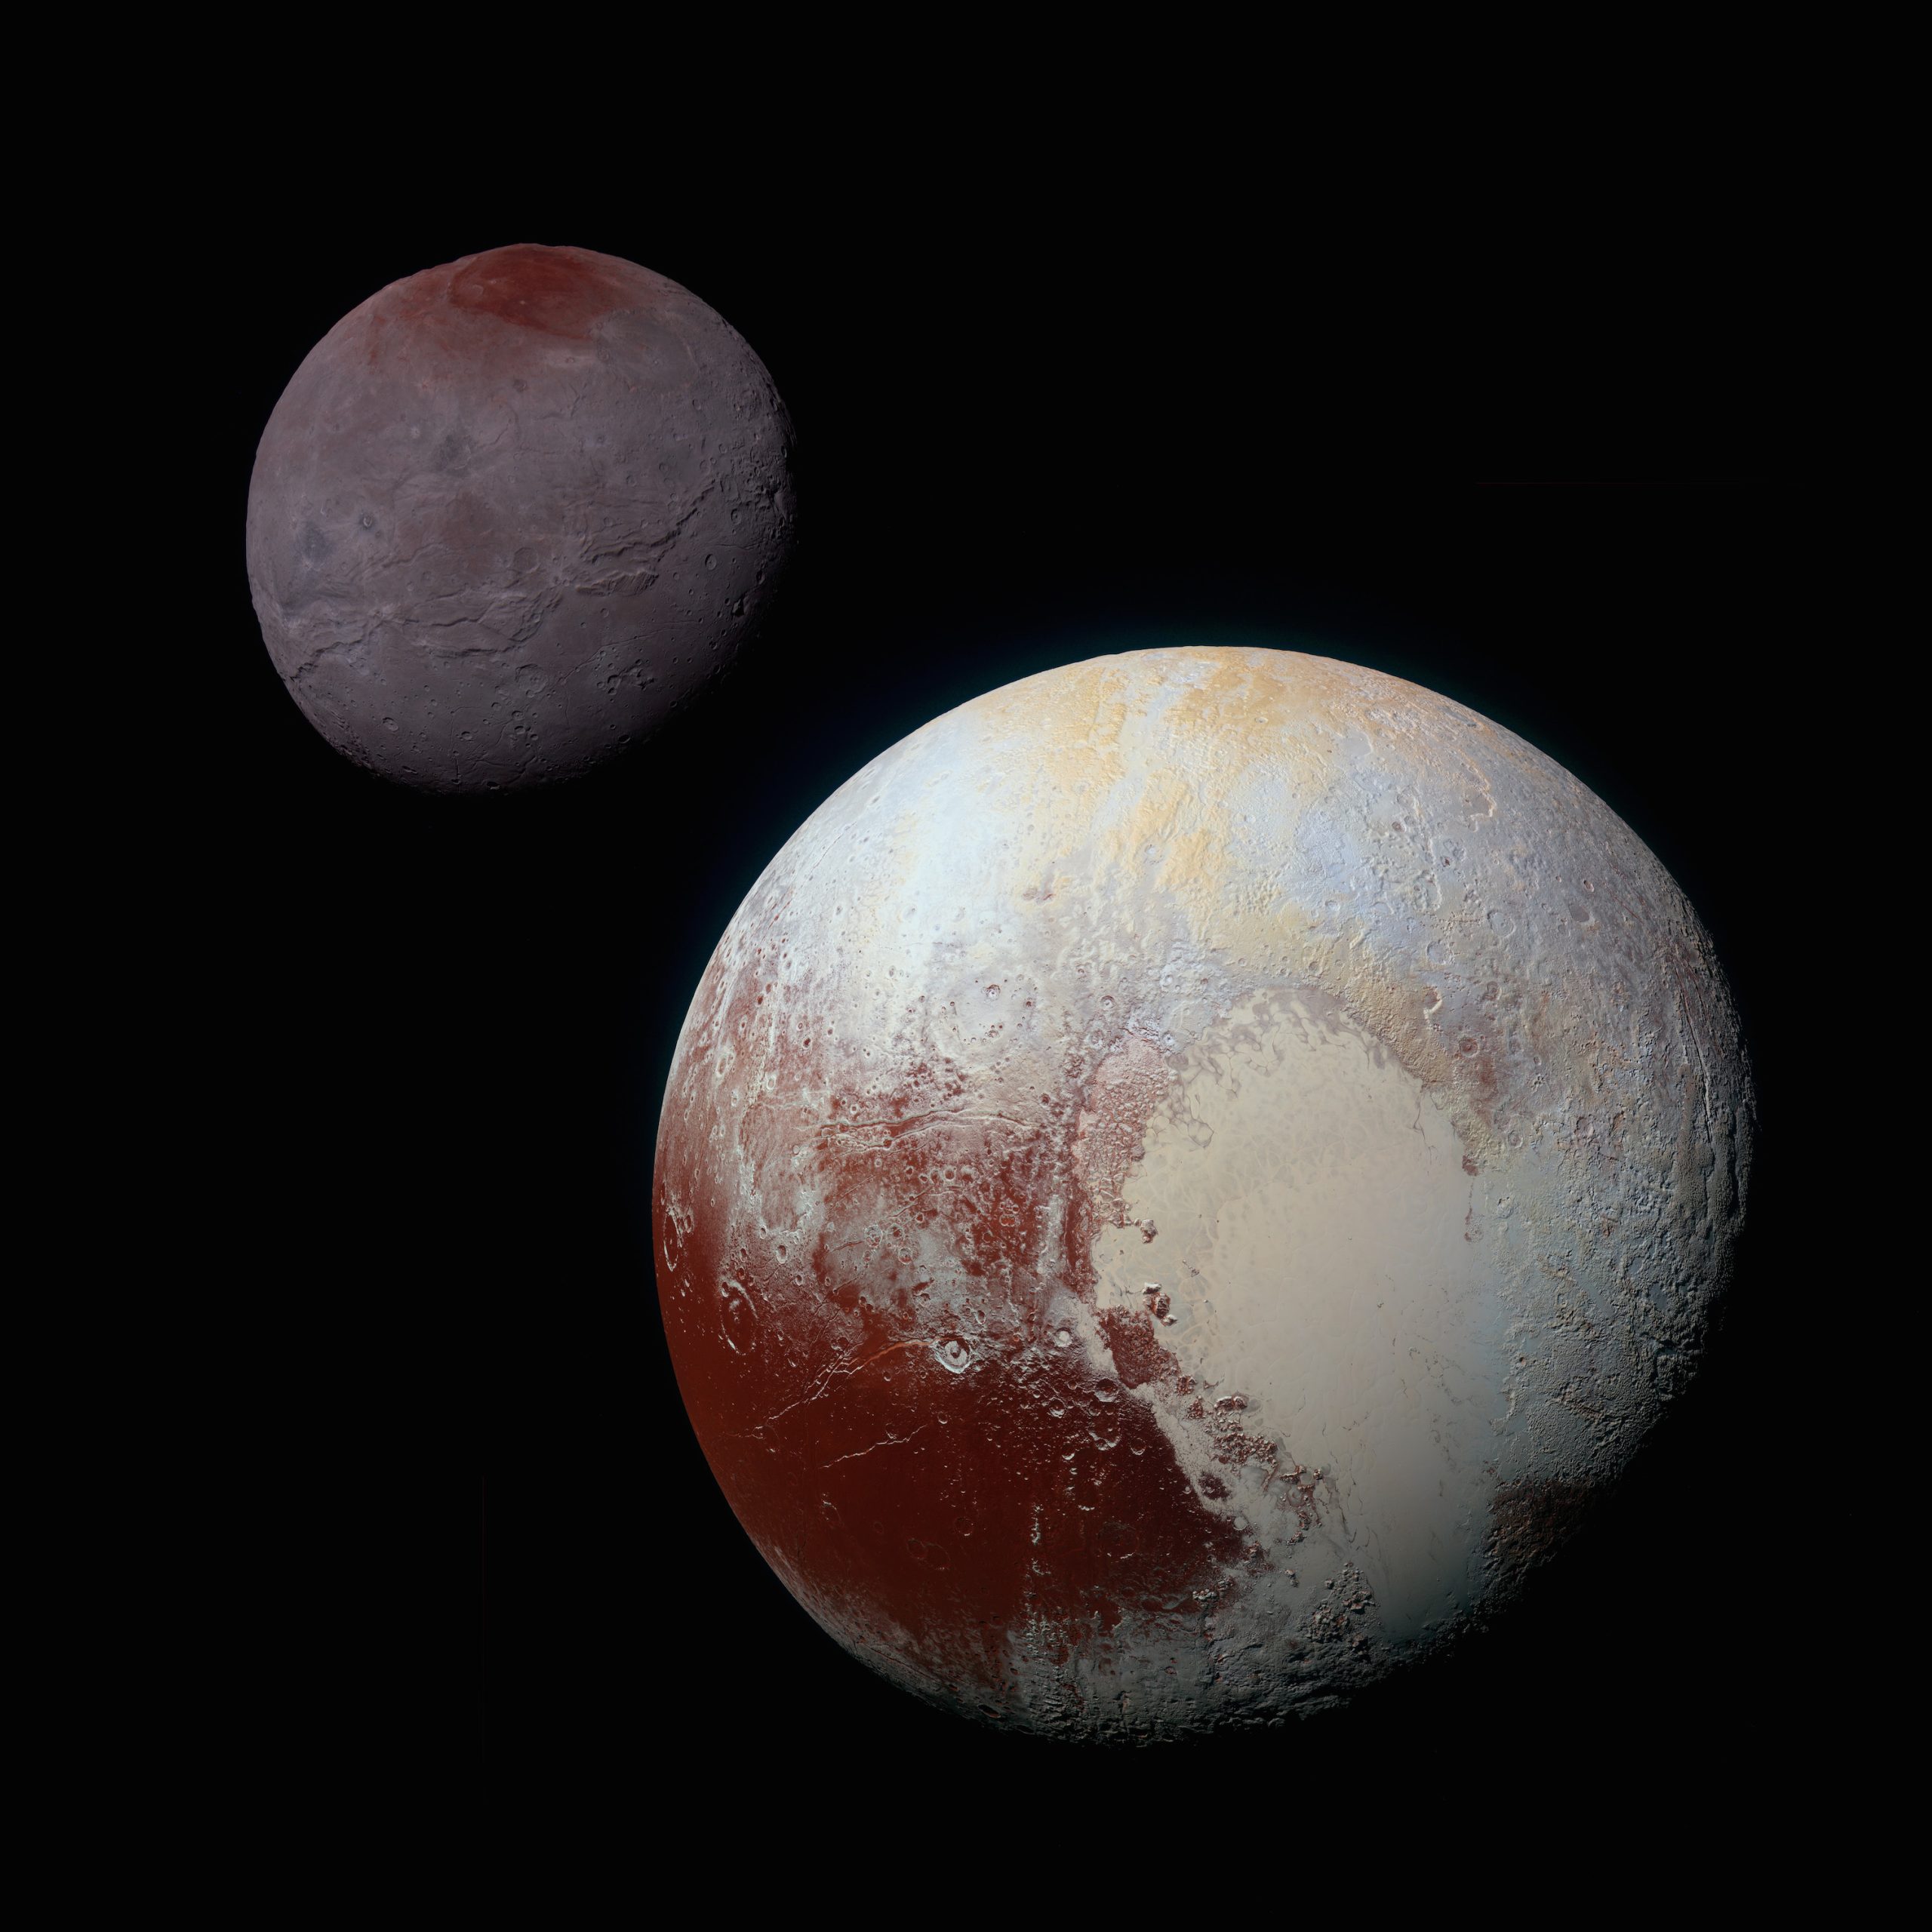 https://upload.wikimedia.org/wikipedia/commons/2/23/Pluto-Charon-v2-10-1-15.jpg